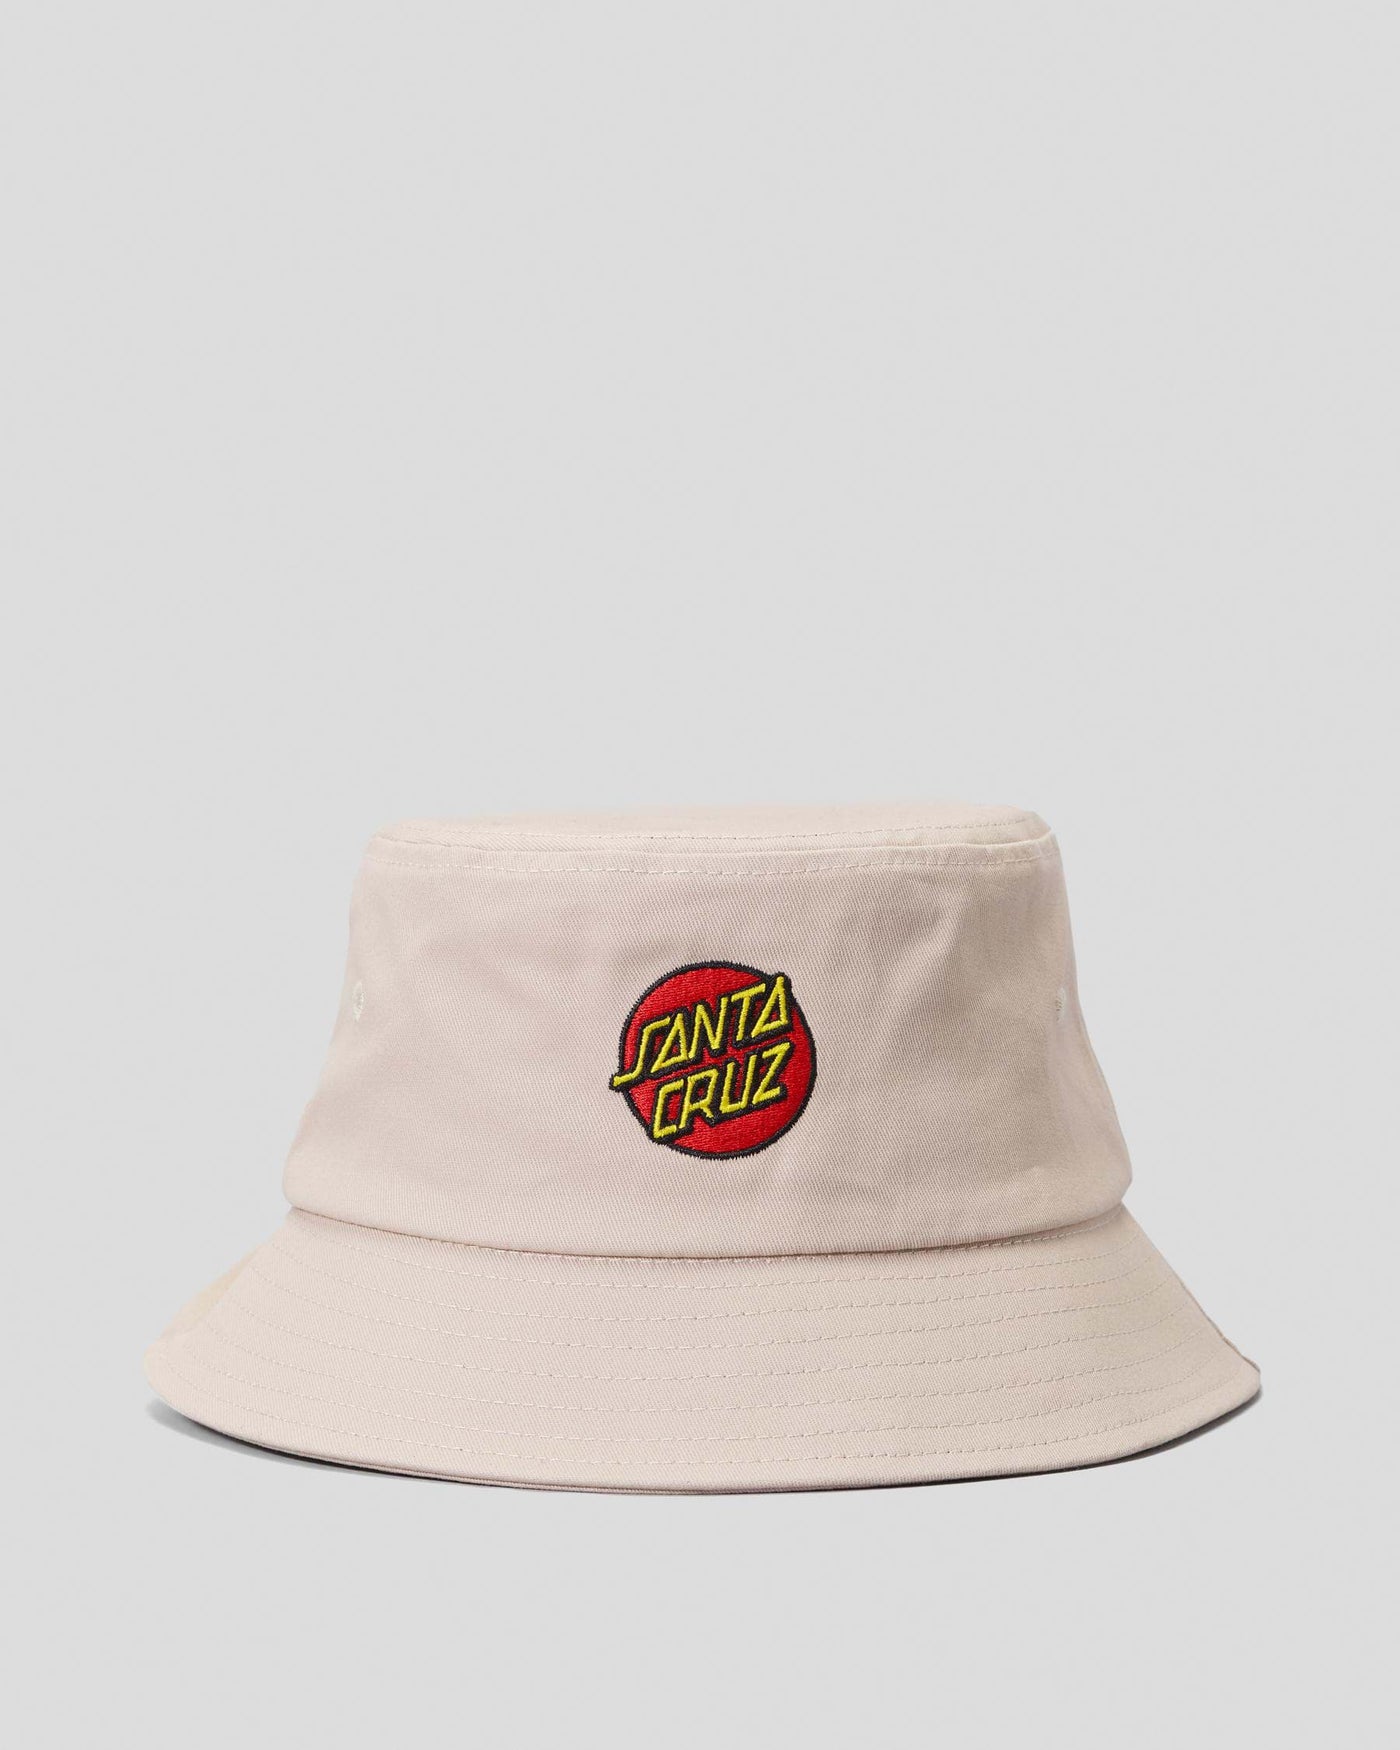 Santa Cruz Classic Dot Patch Bucket Hat Natural